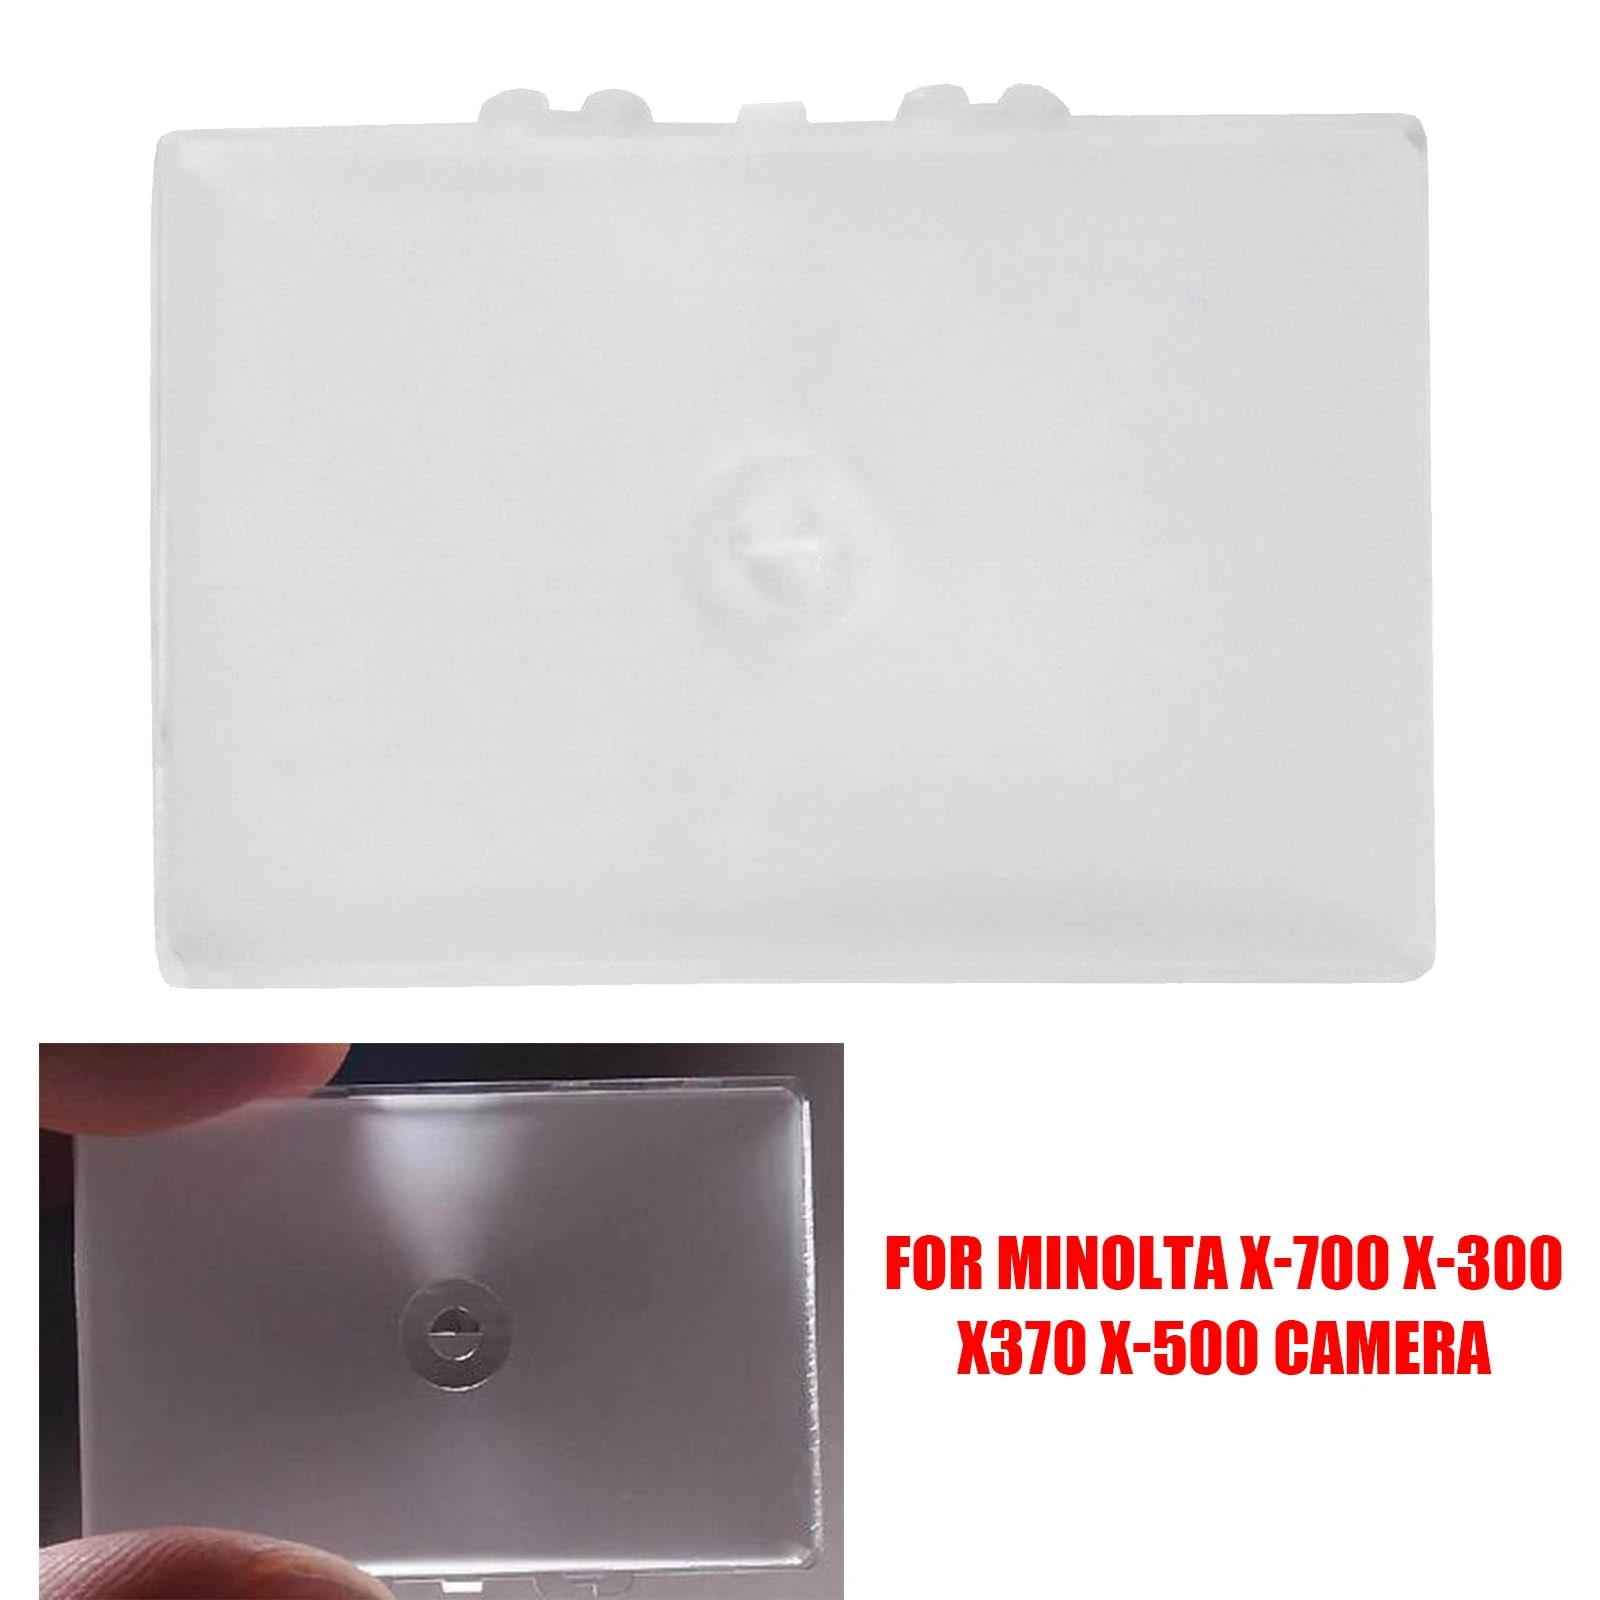 Tela de foco Micro Prism para Minolta, Matte, Split Image, X-700, X-500, X-300, X370